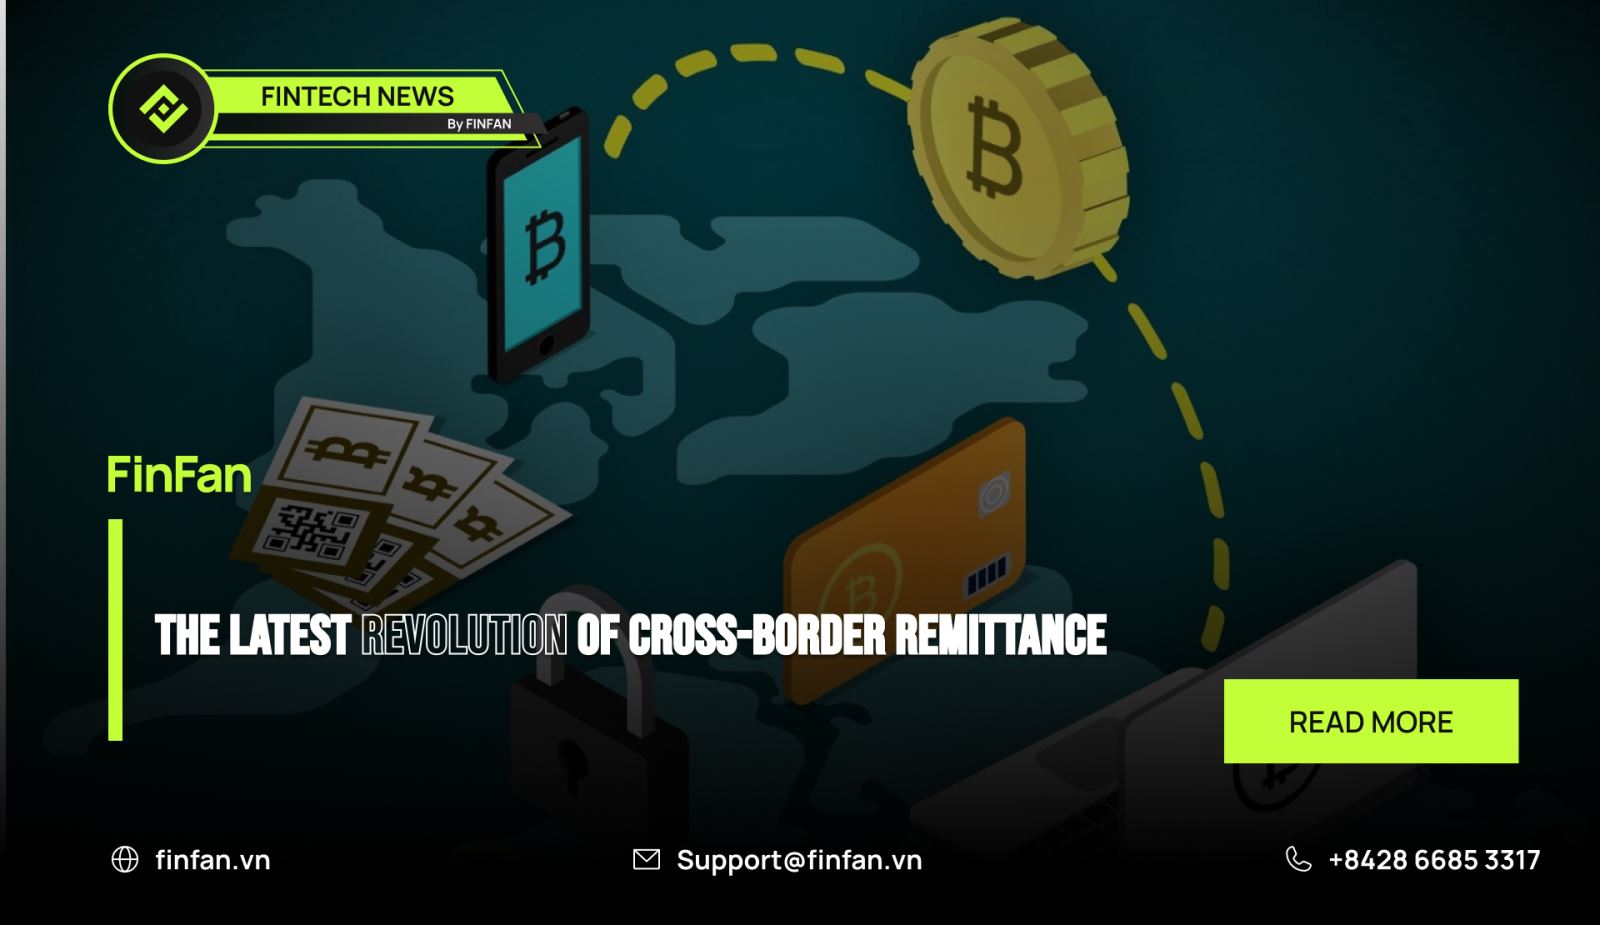 The latest revolution of cross-border remittance